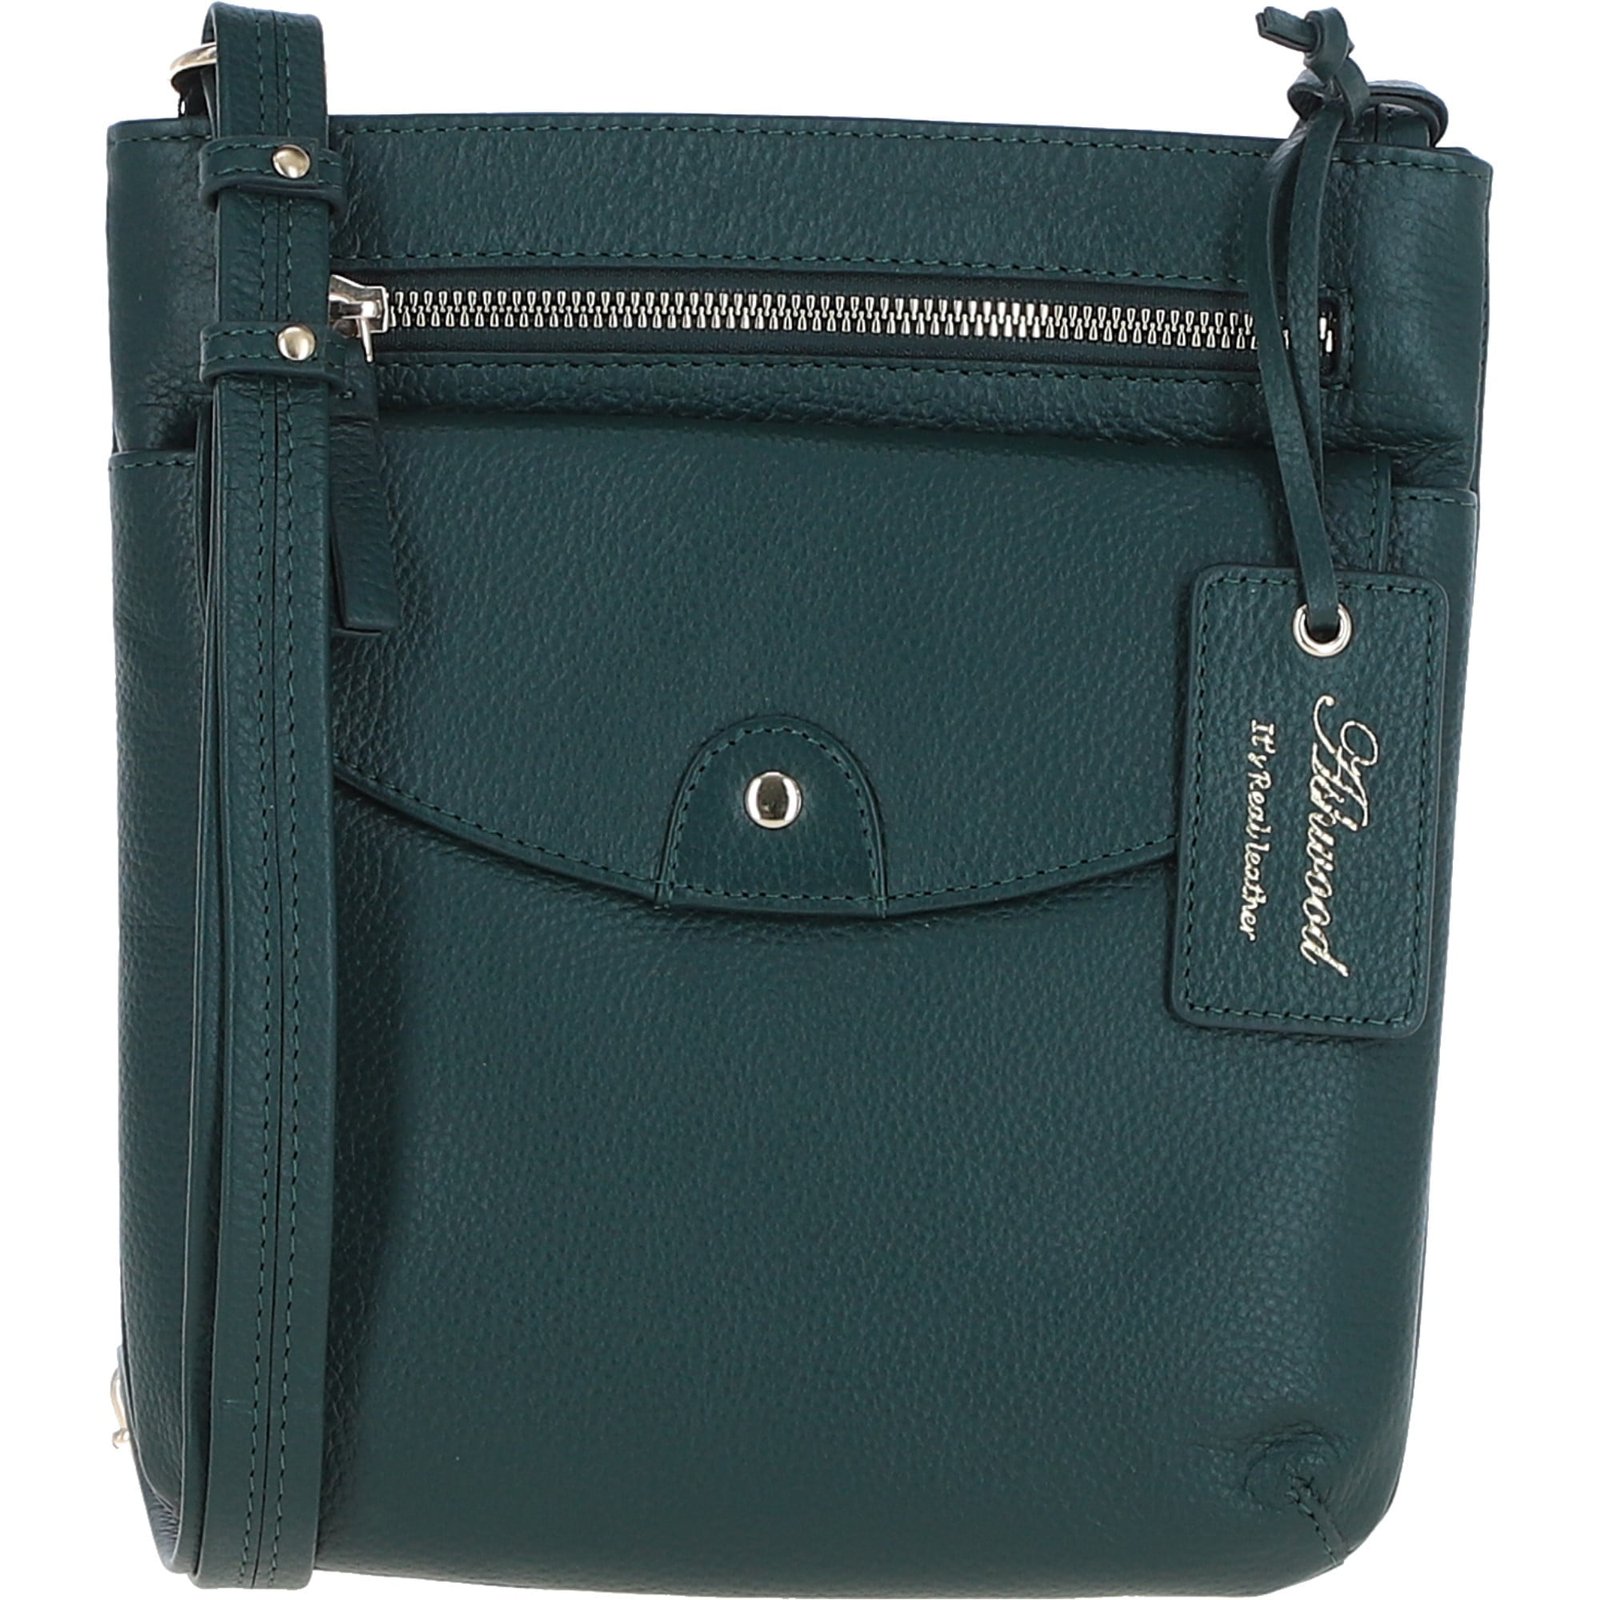 'Five CB' Real Leather Cross Body Bag: CB-5 Green NA from Ashwood Handbags